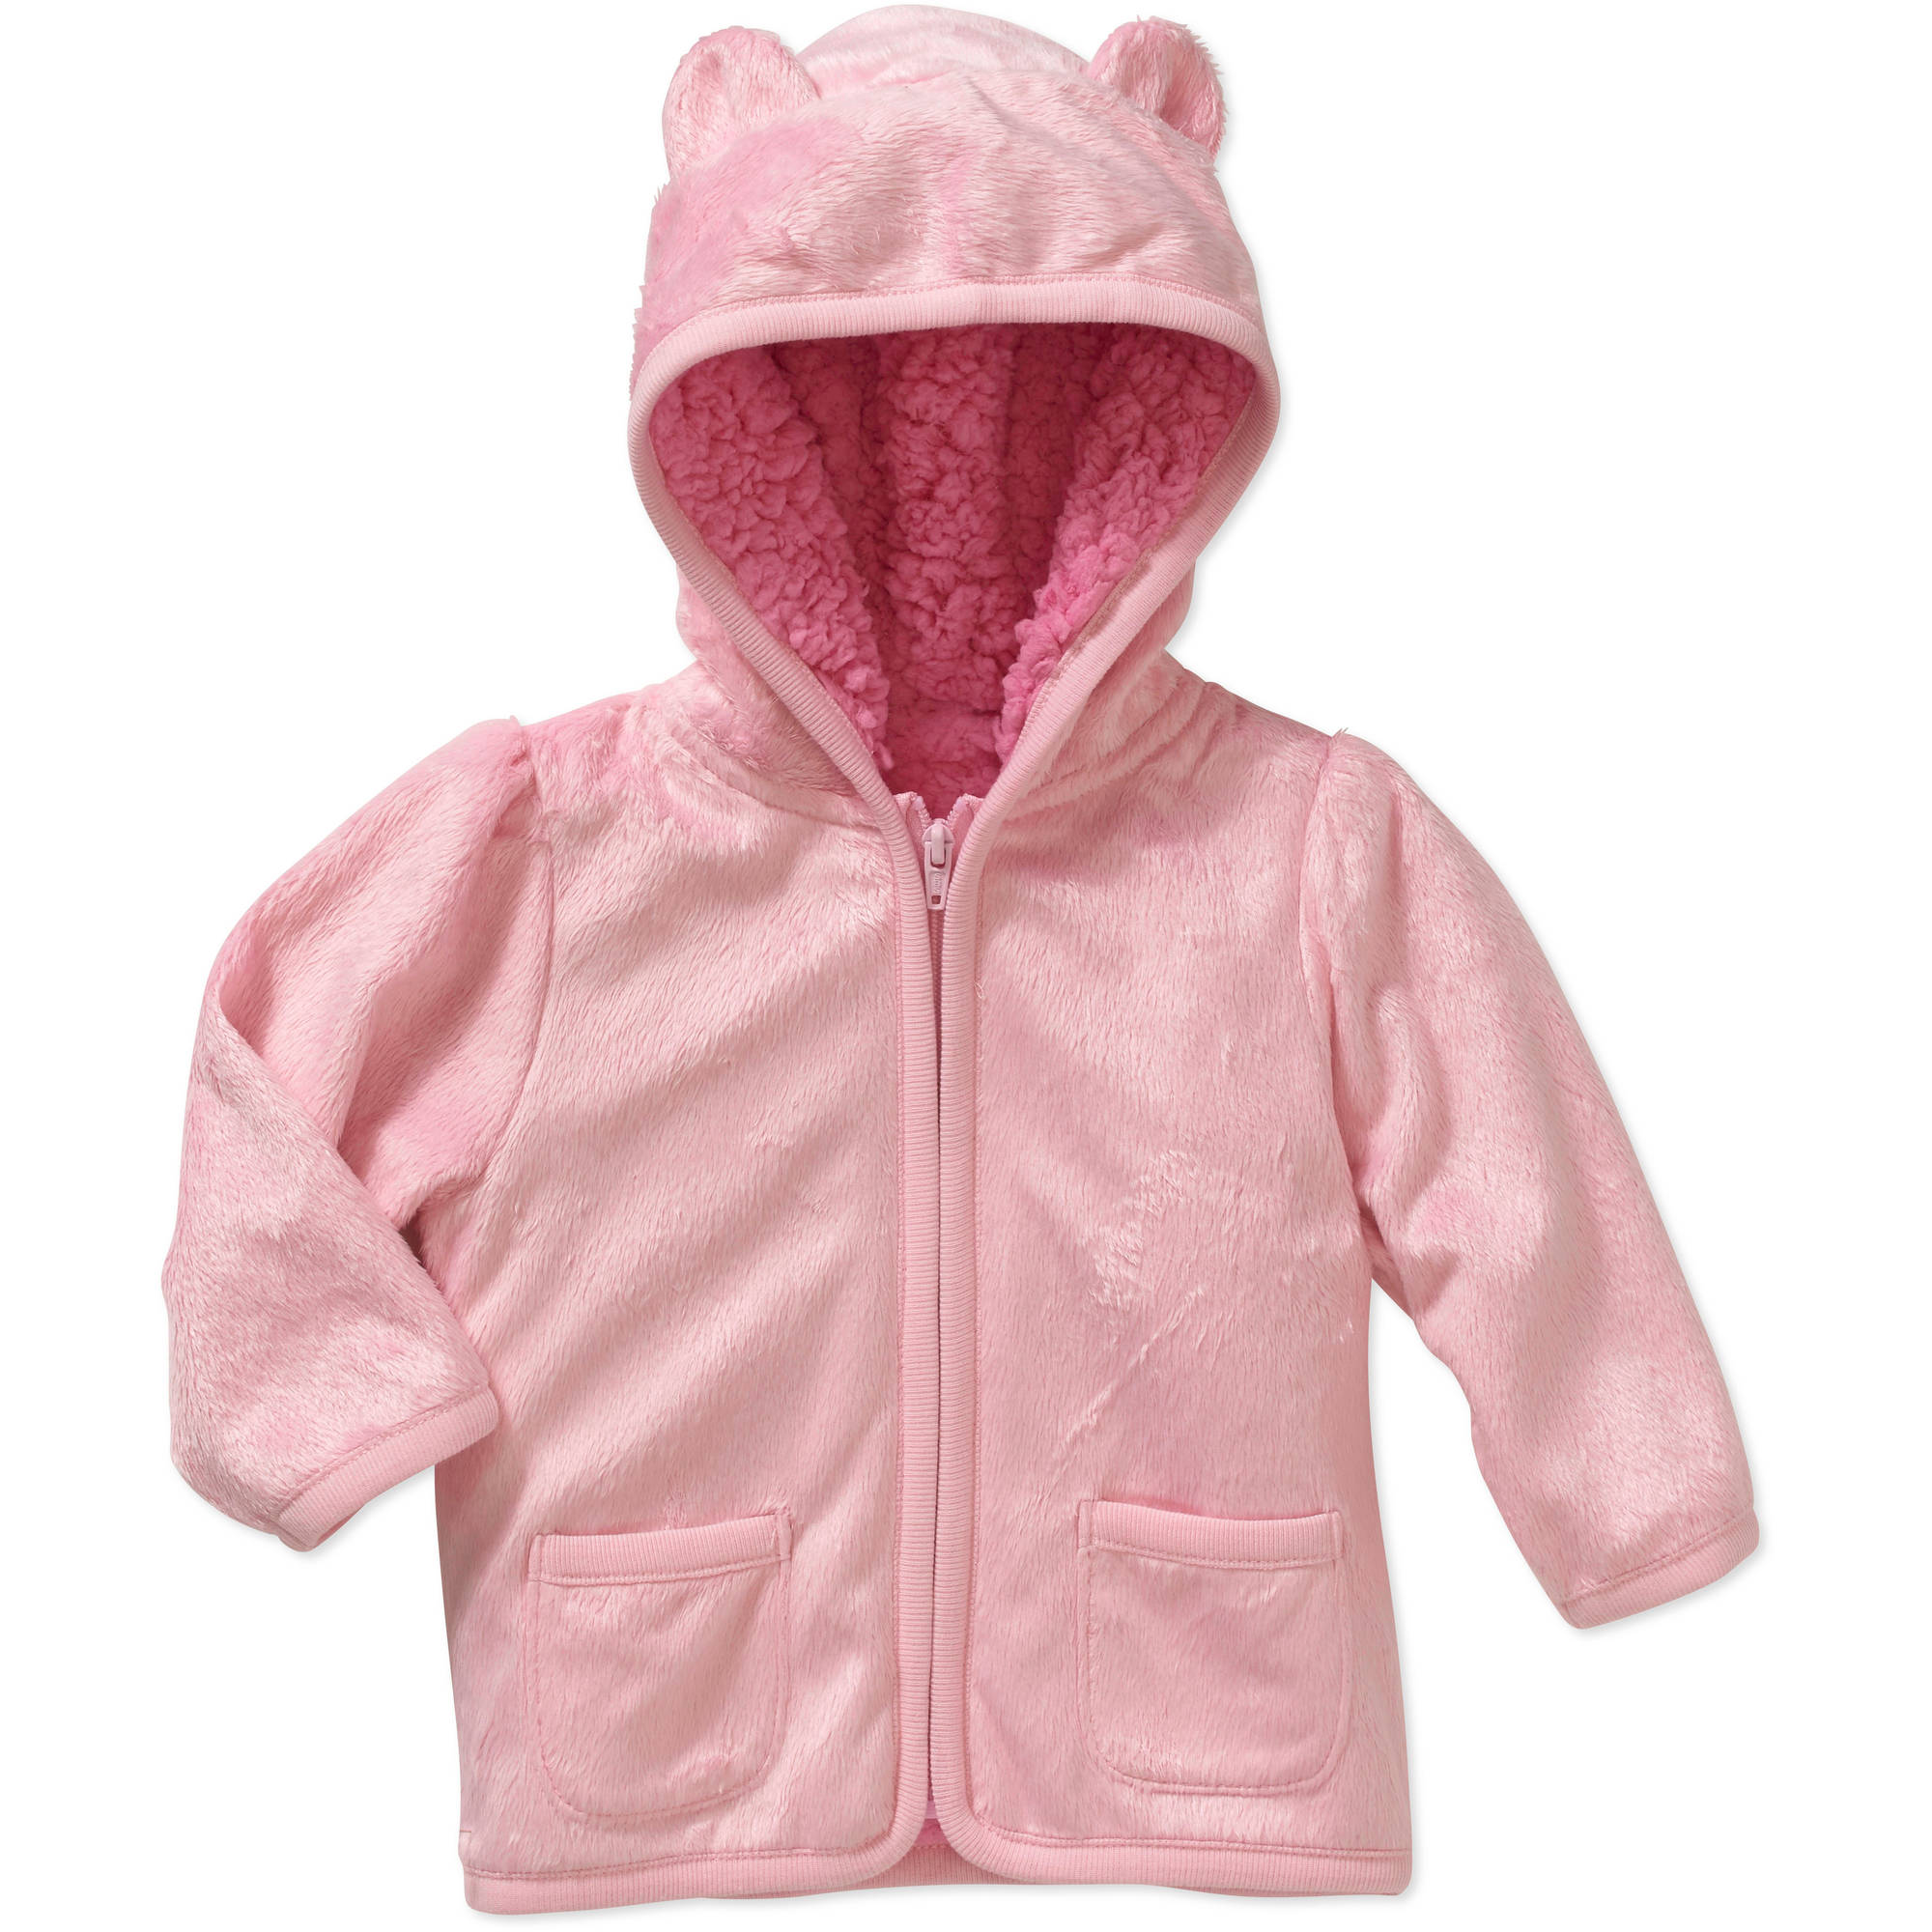 Ht Newborn Girl Minky Hoodie-lt Pink - image 1 of 1